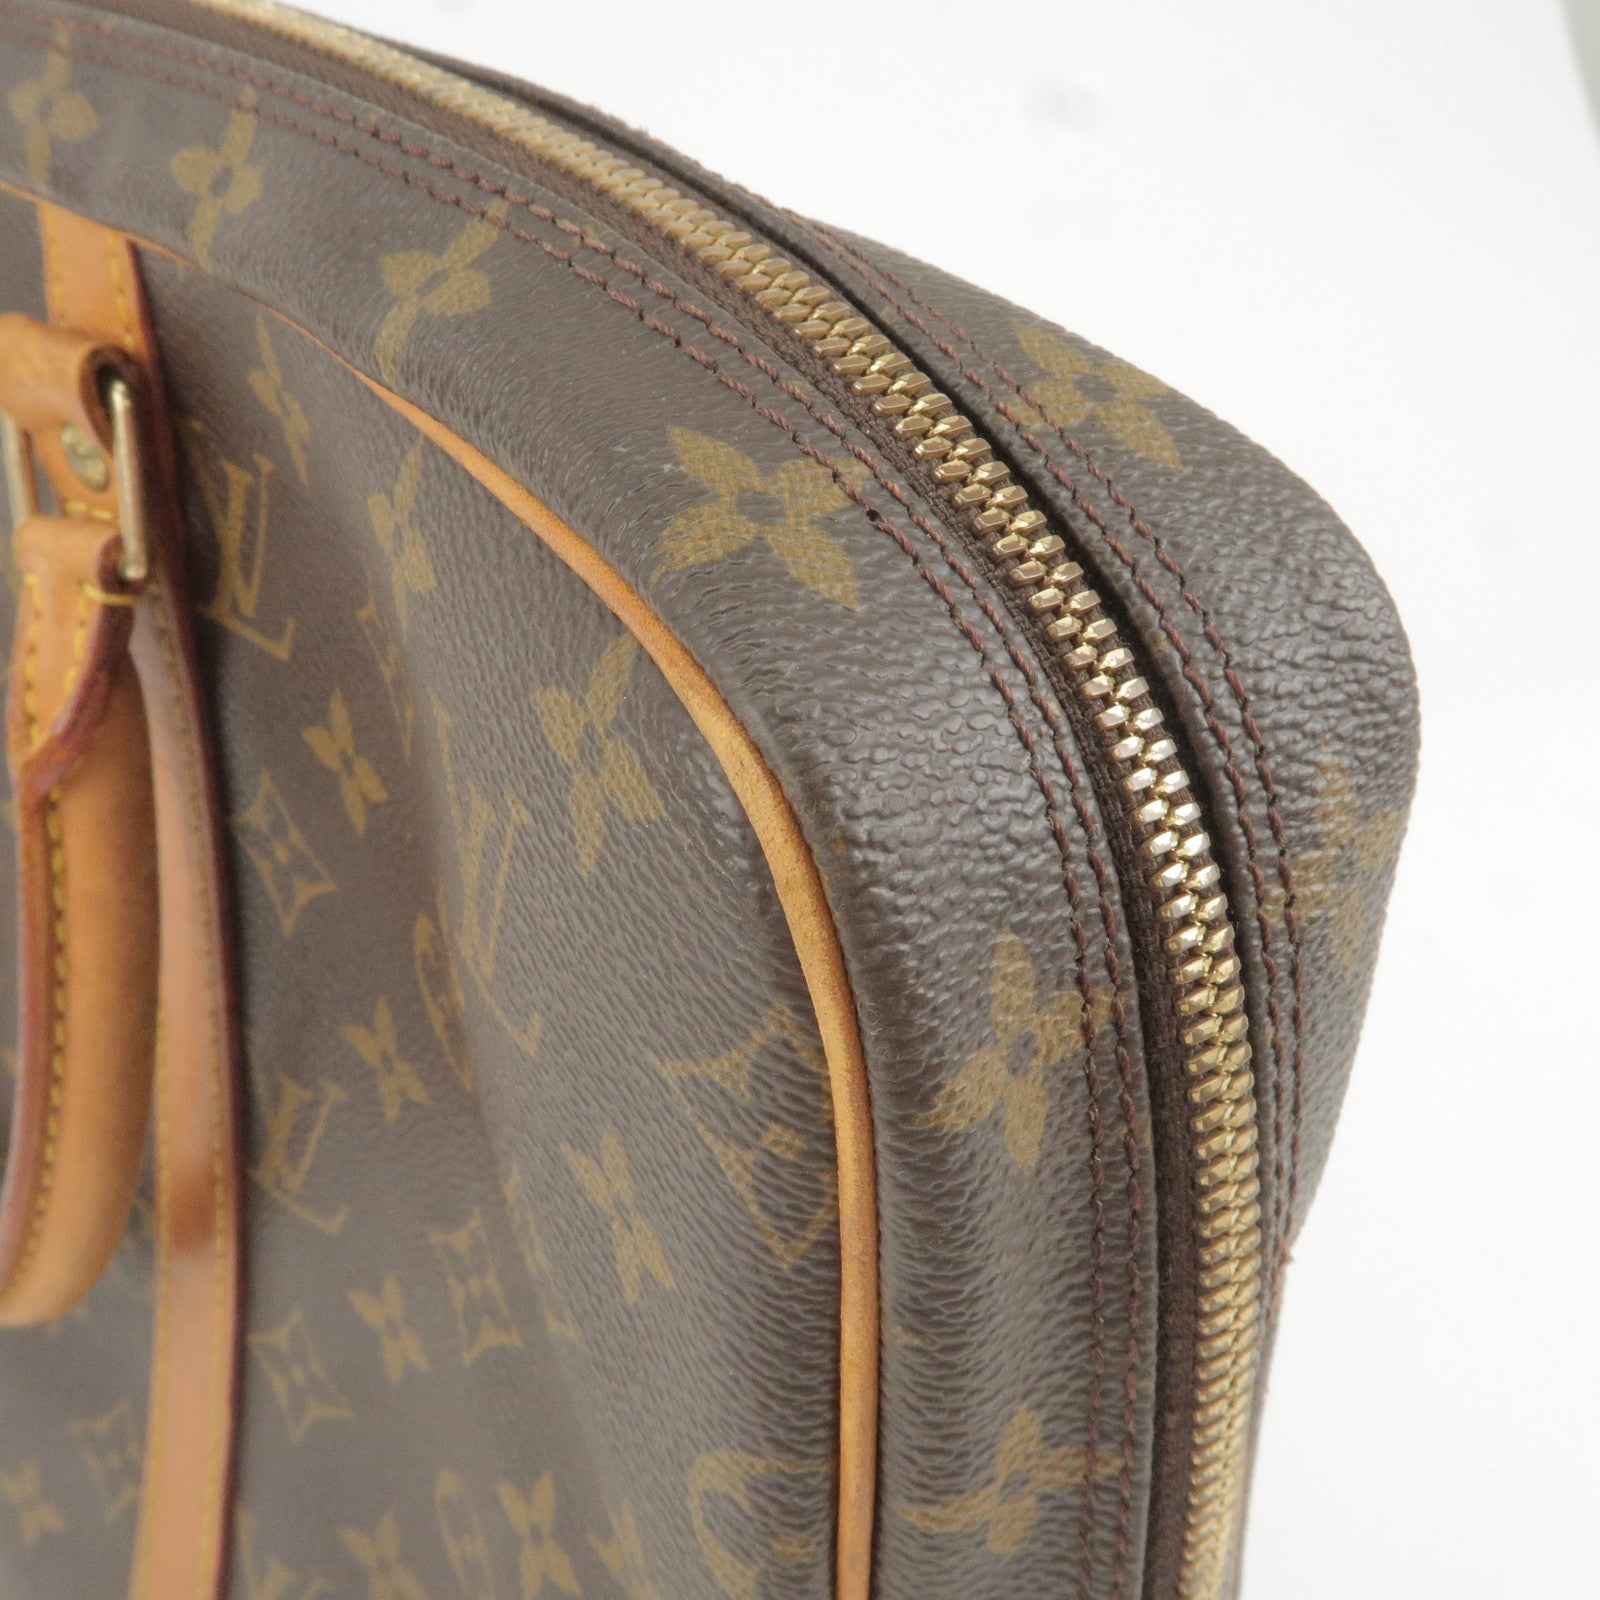 Bags, Louis Vuitton X Supreme Slender Black Wallet